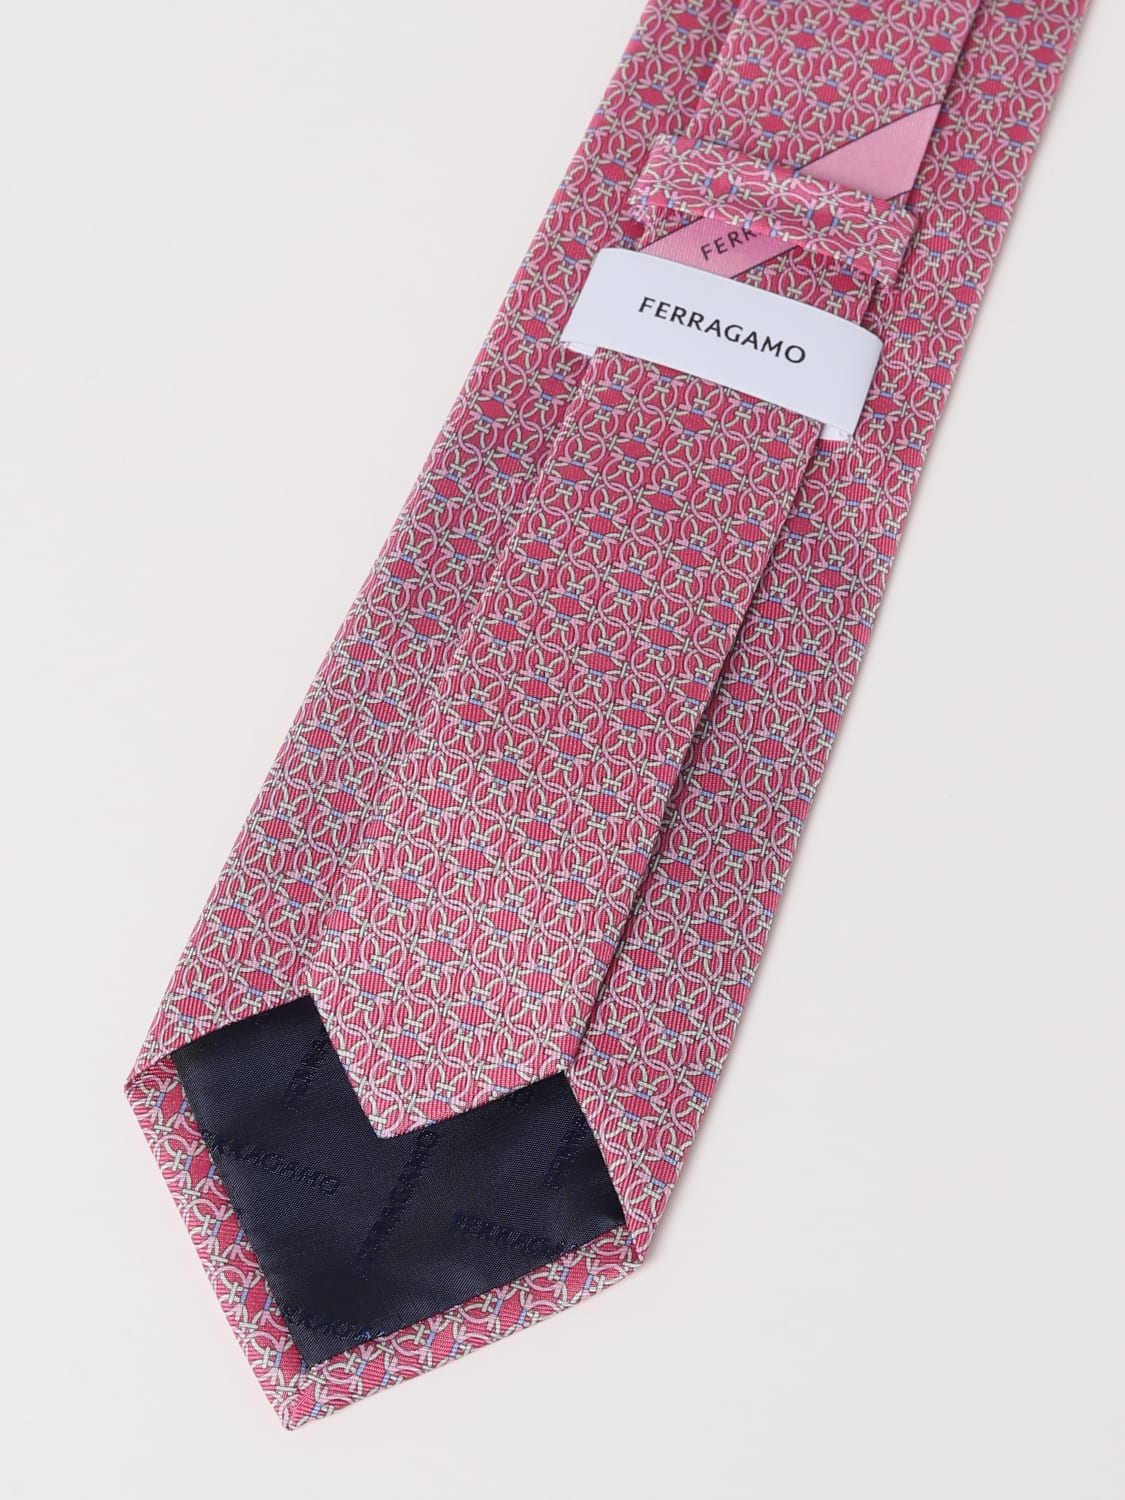 FERRAGAMO: silk tie with Gancini Circle print - Pink | Ferragamo tie ...